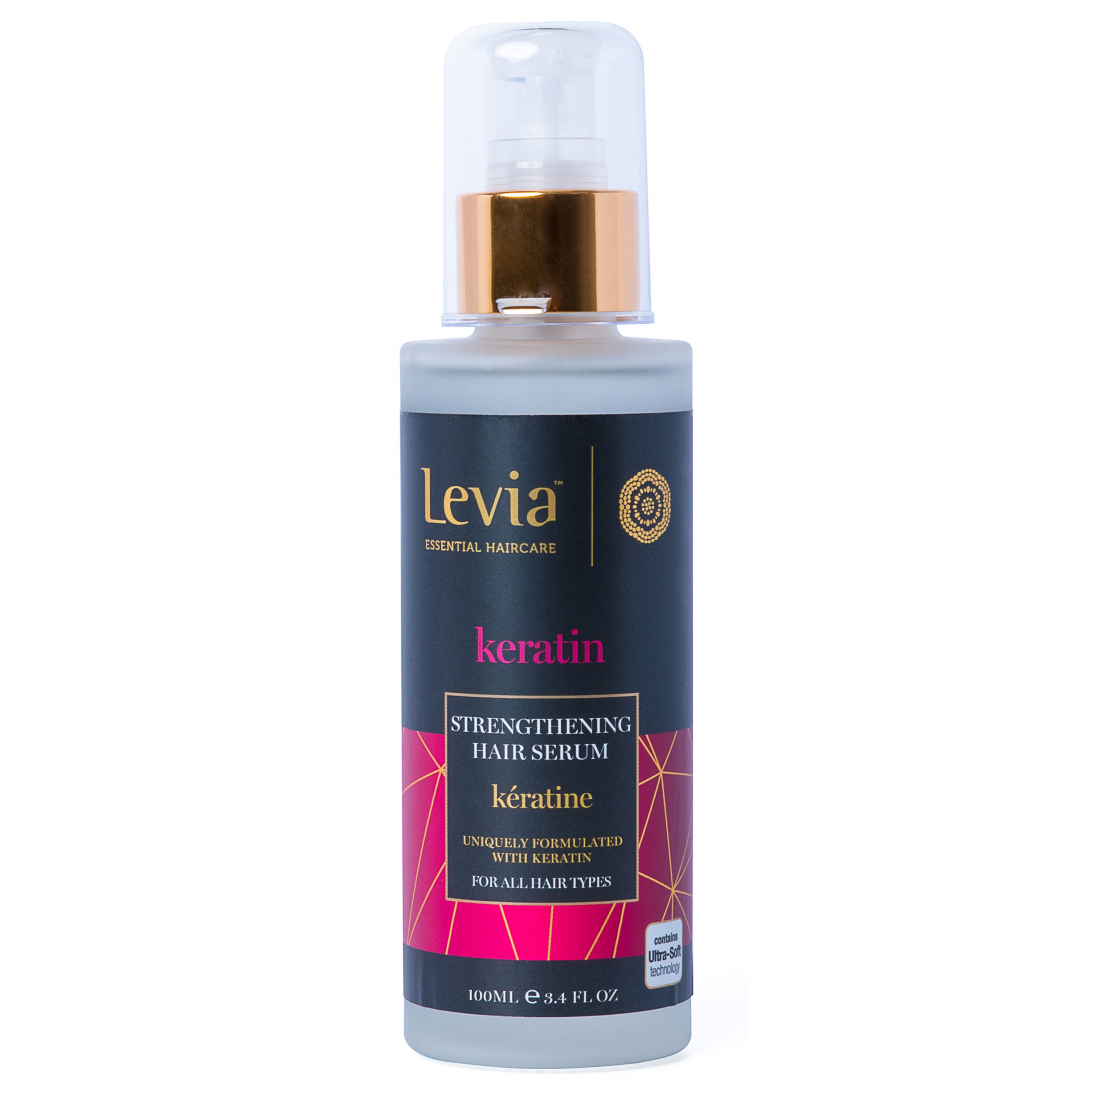 'Strengthening Keratin' Hair Serum - 100 ml